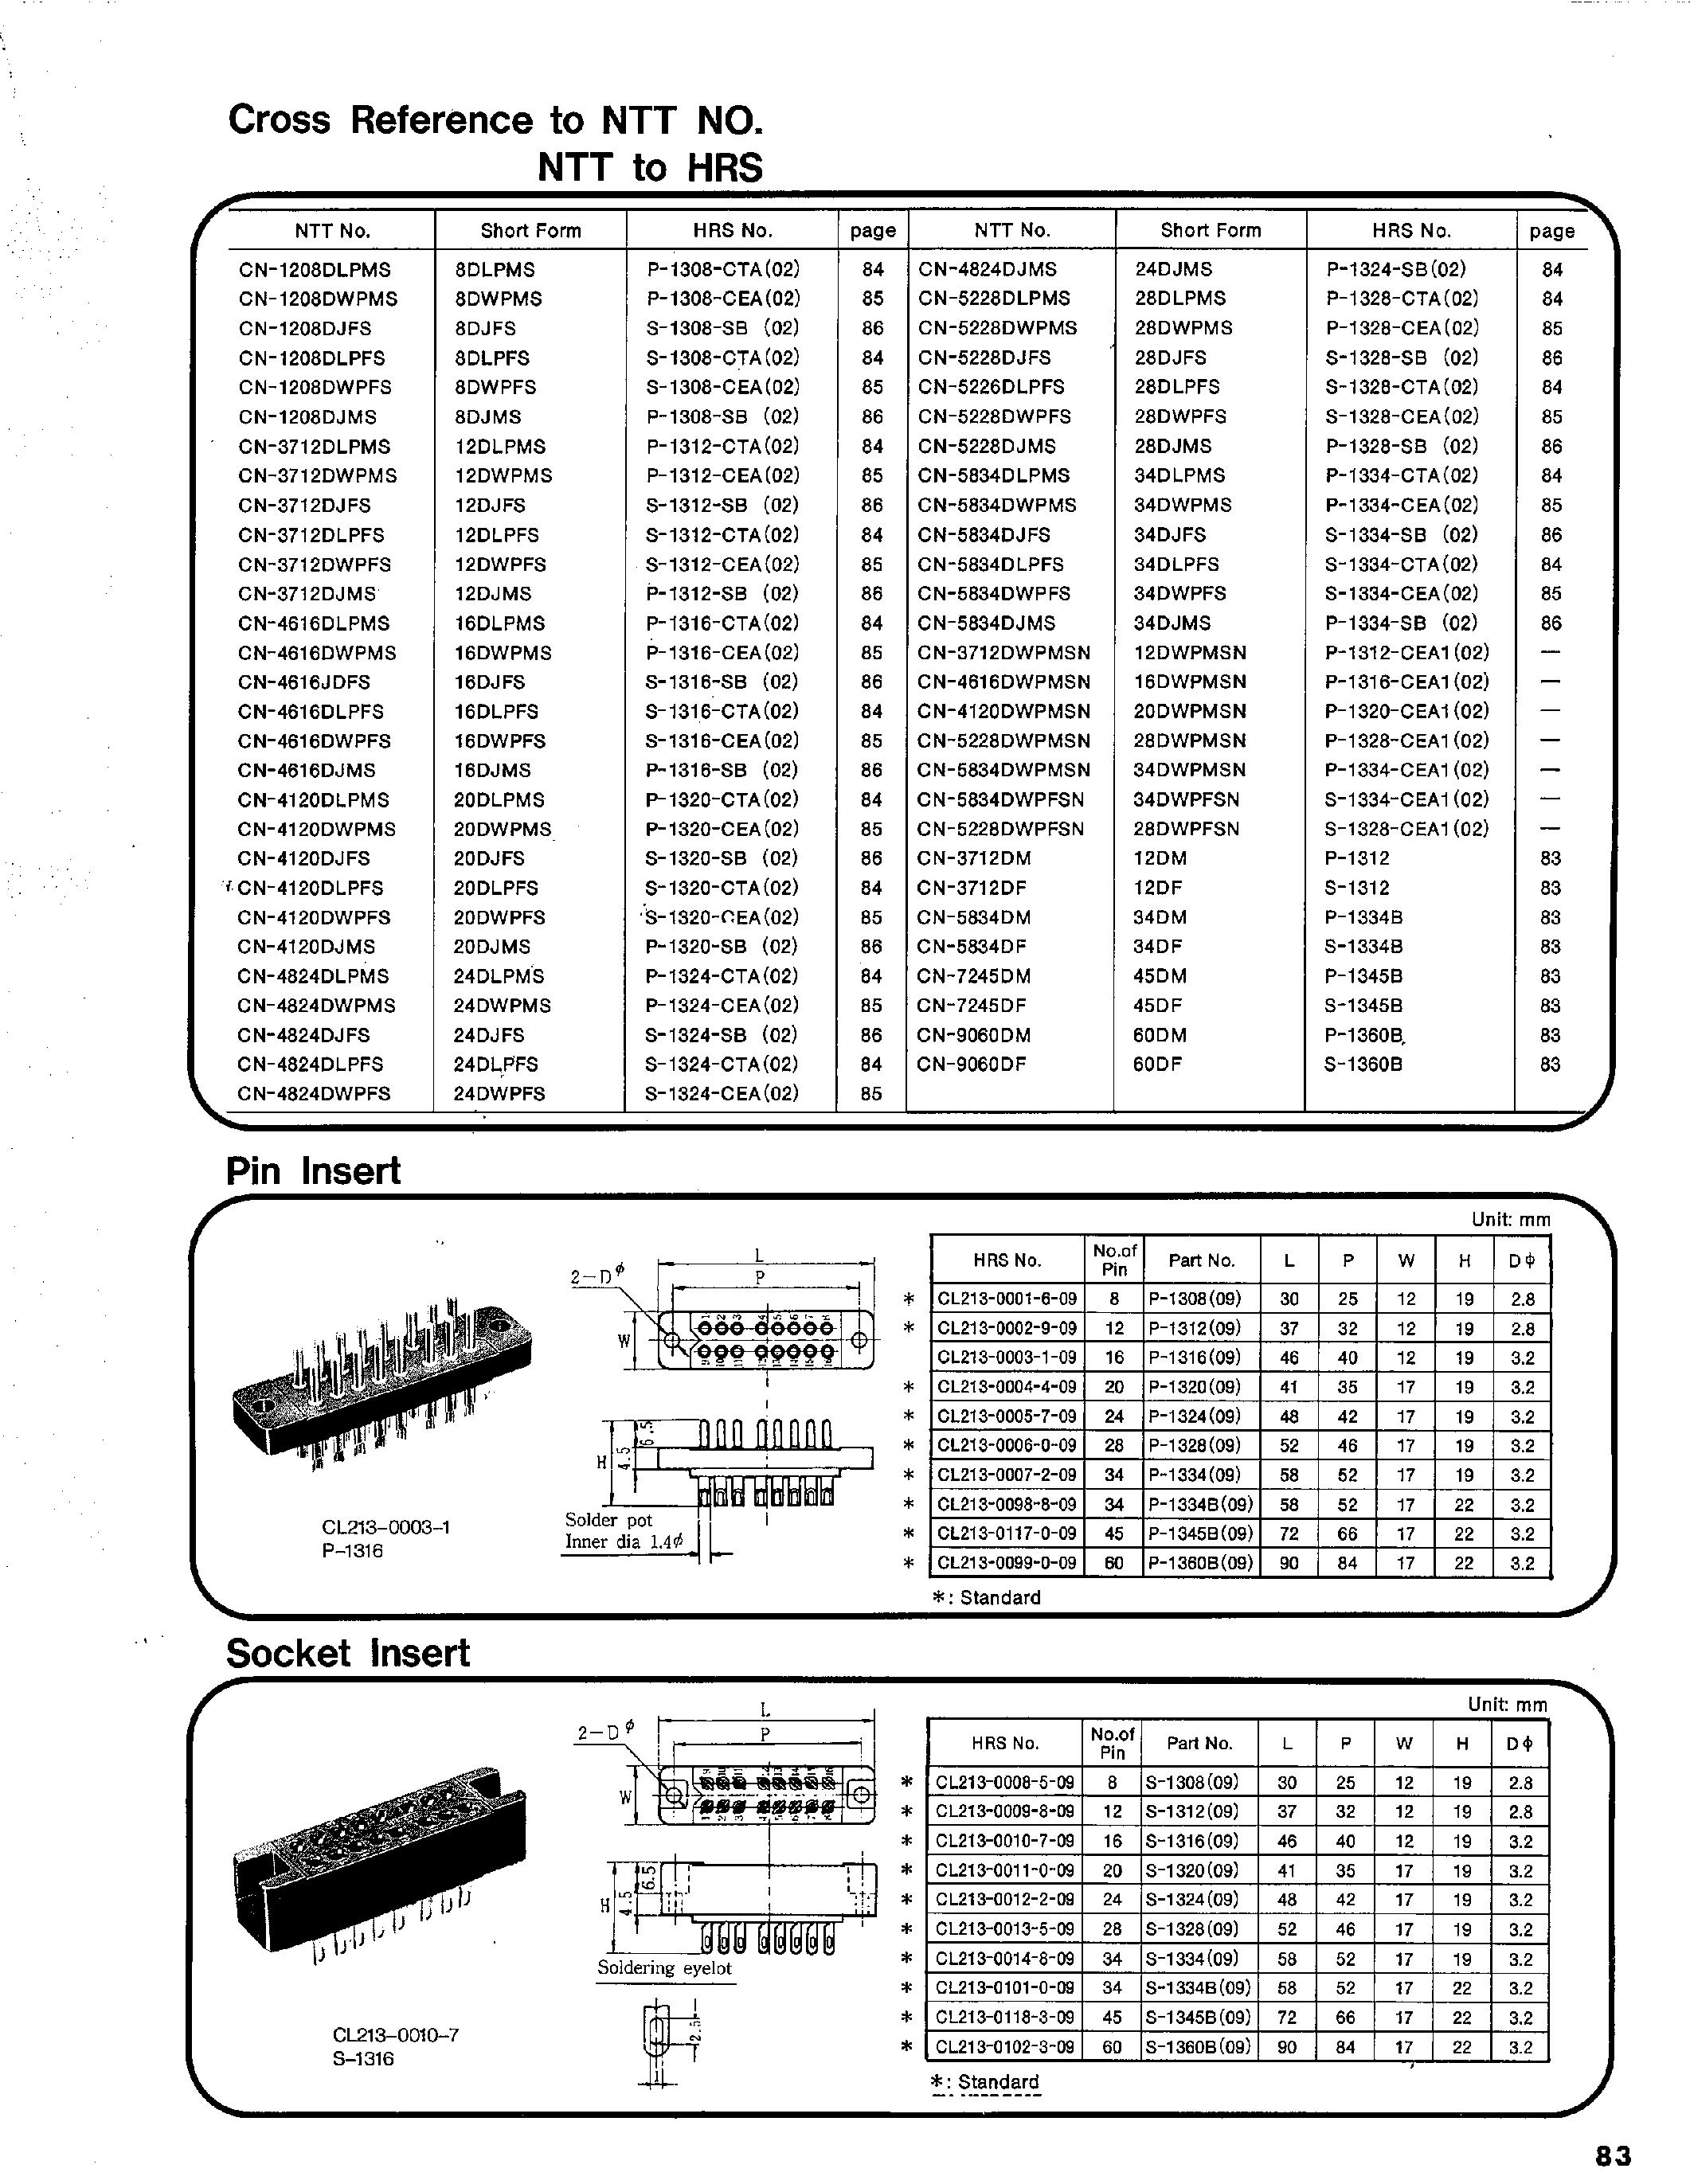 Datasheet P-1316-CE - 1300 SERIES RECTANGULAR CONNECTORS page 2